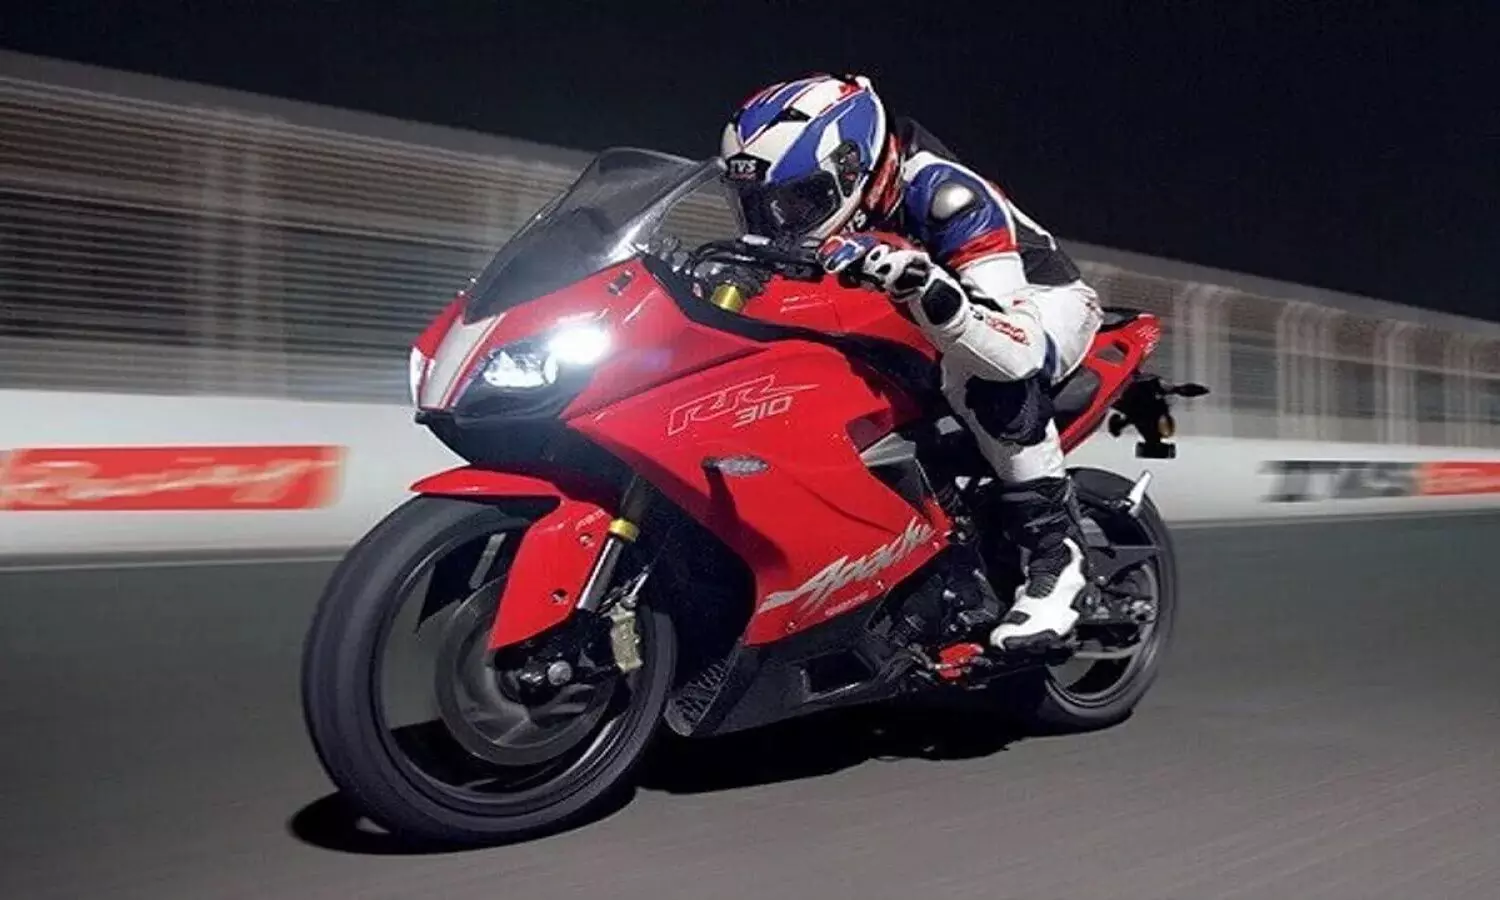 New TVS Apache Price: महंगी हो गई TVS की रेसिंग बाइक अपाचे, अब कितनी कीमत देनी होगी